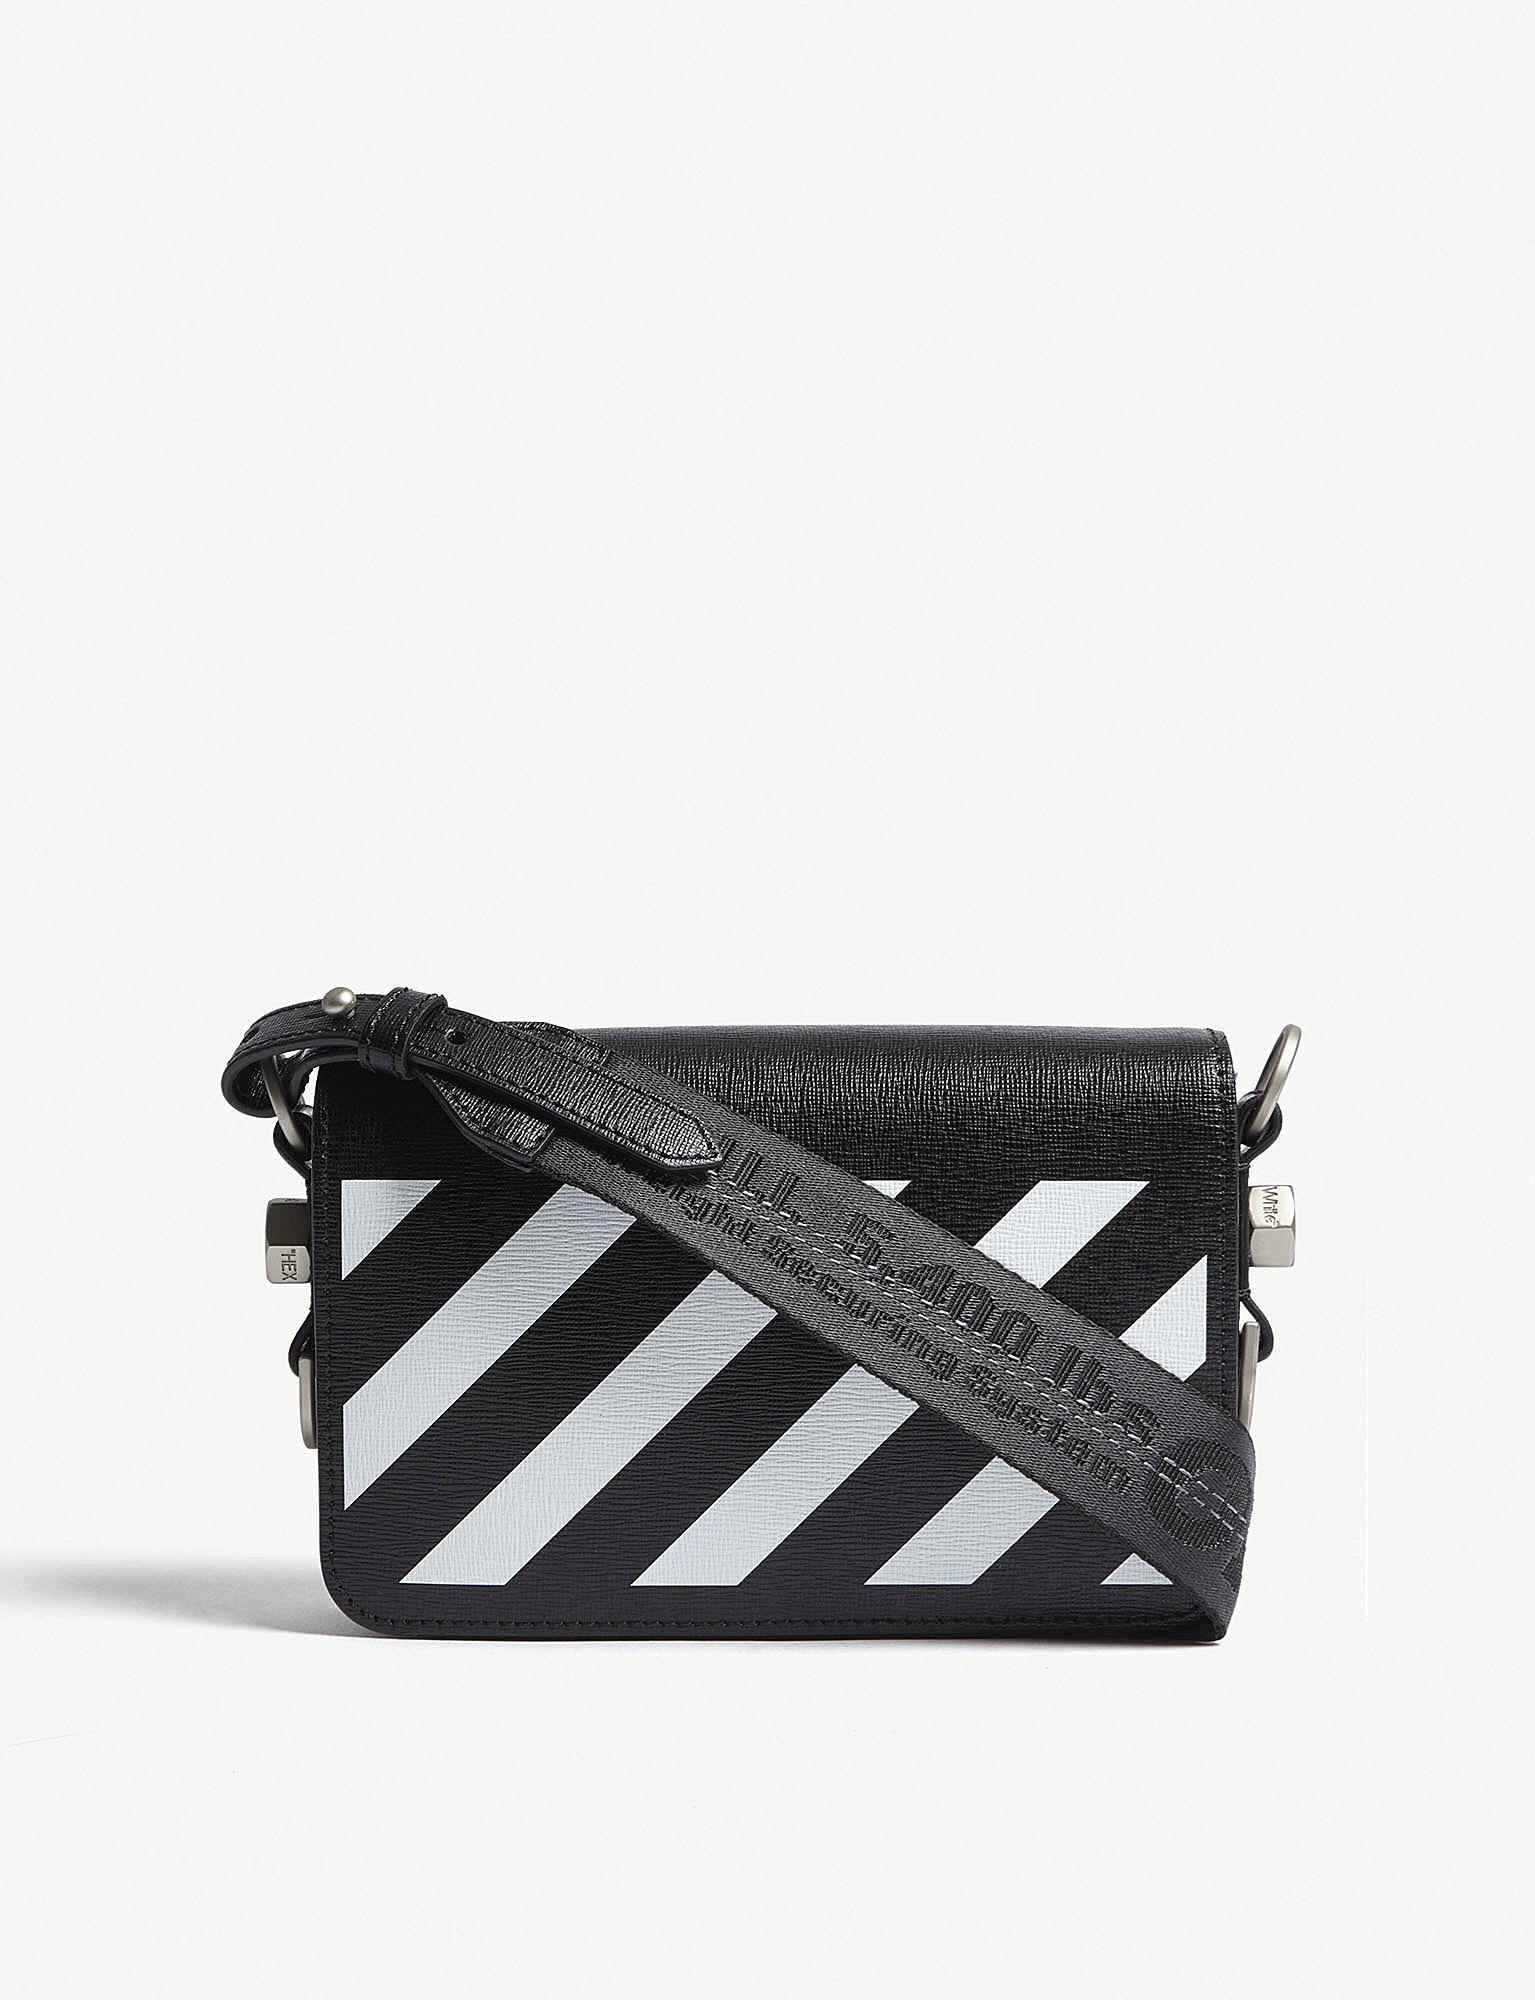 Off-White c/o Virgil Abloh Diagonal-stripe Leather Cross-body Bag in Black - Lyst